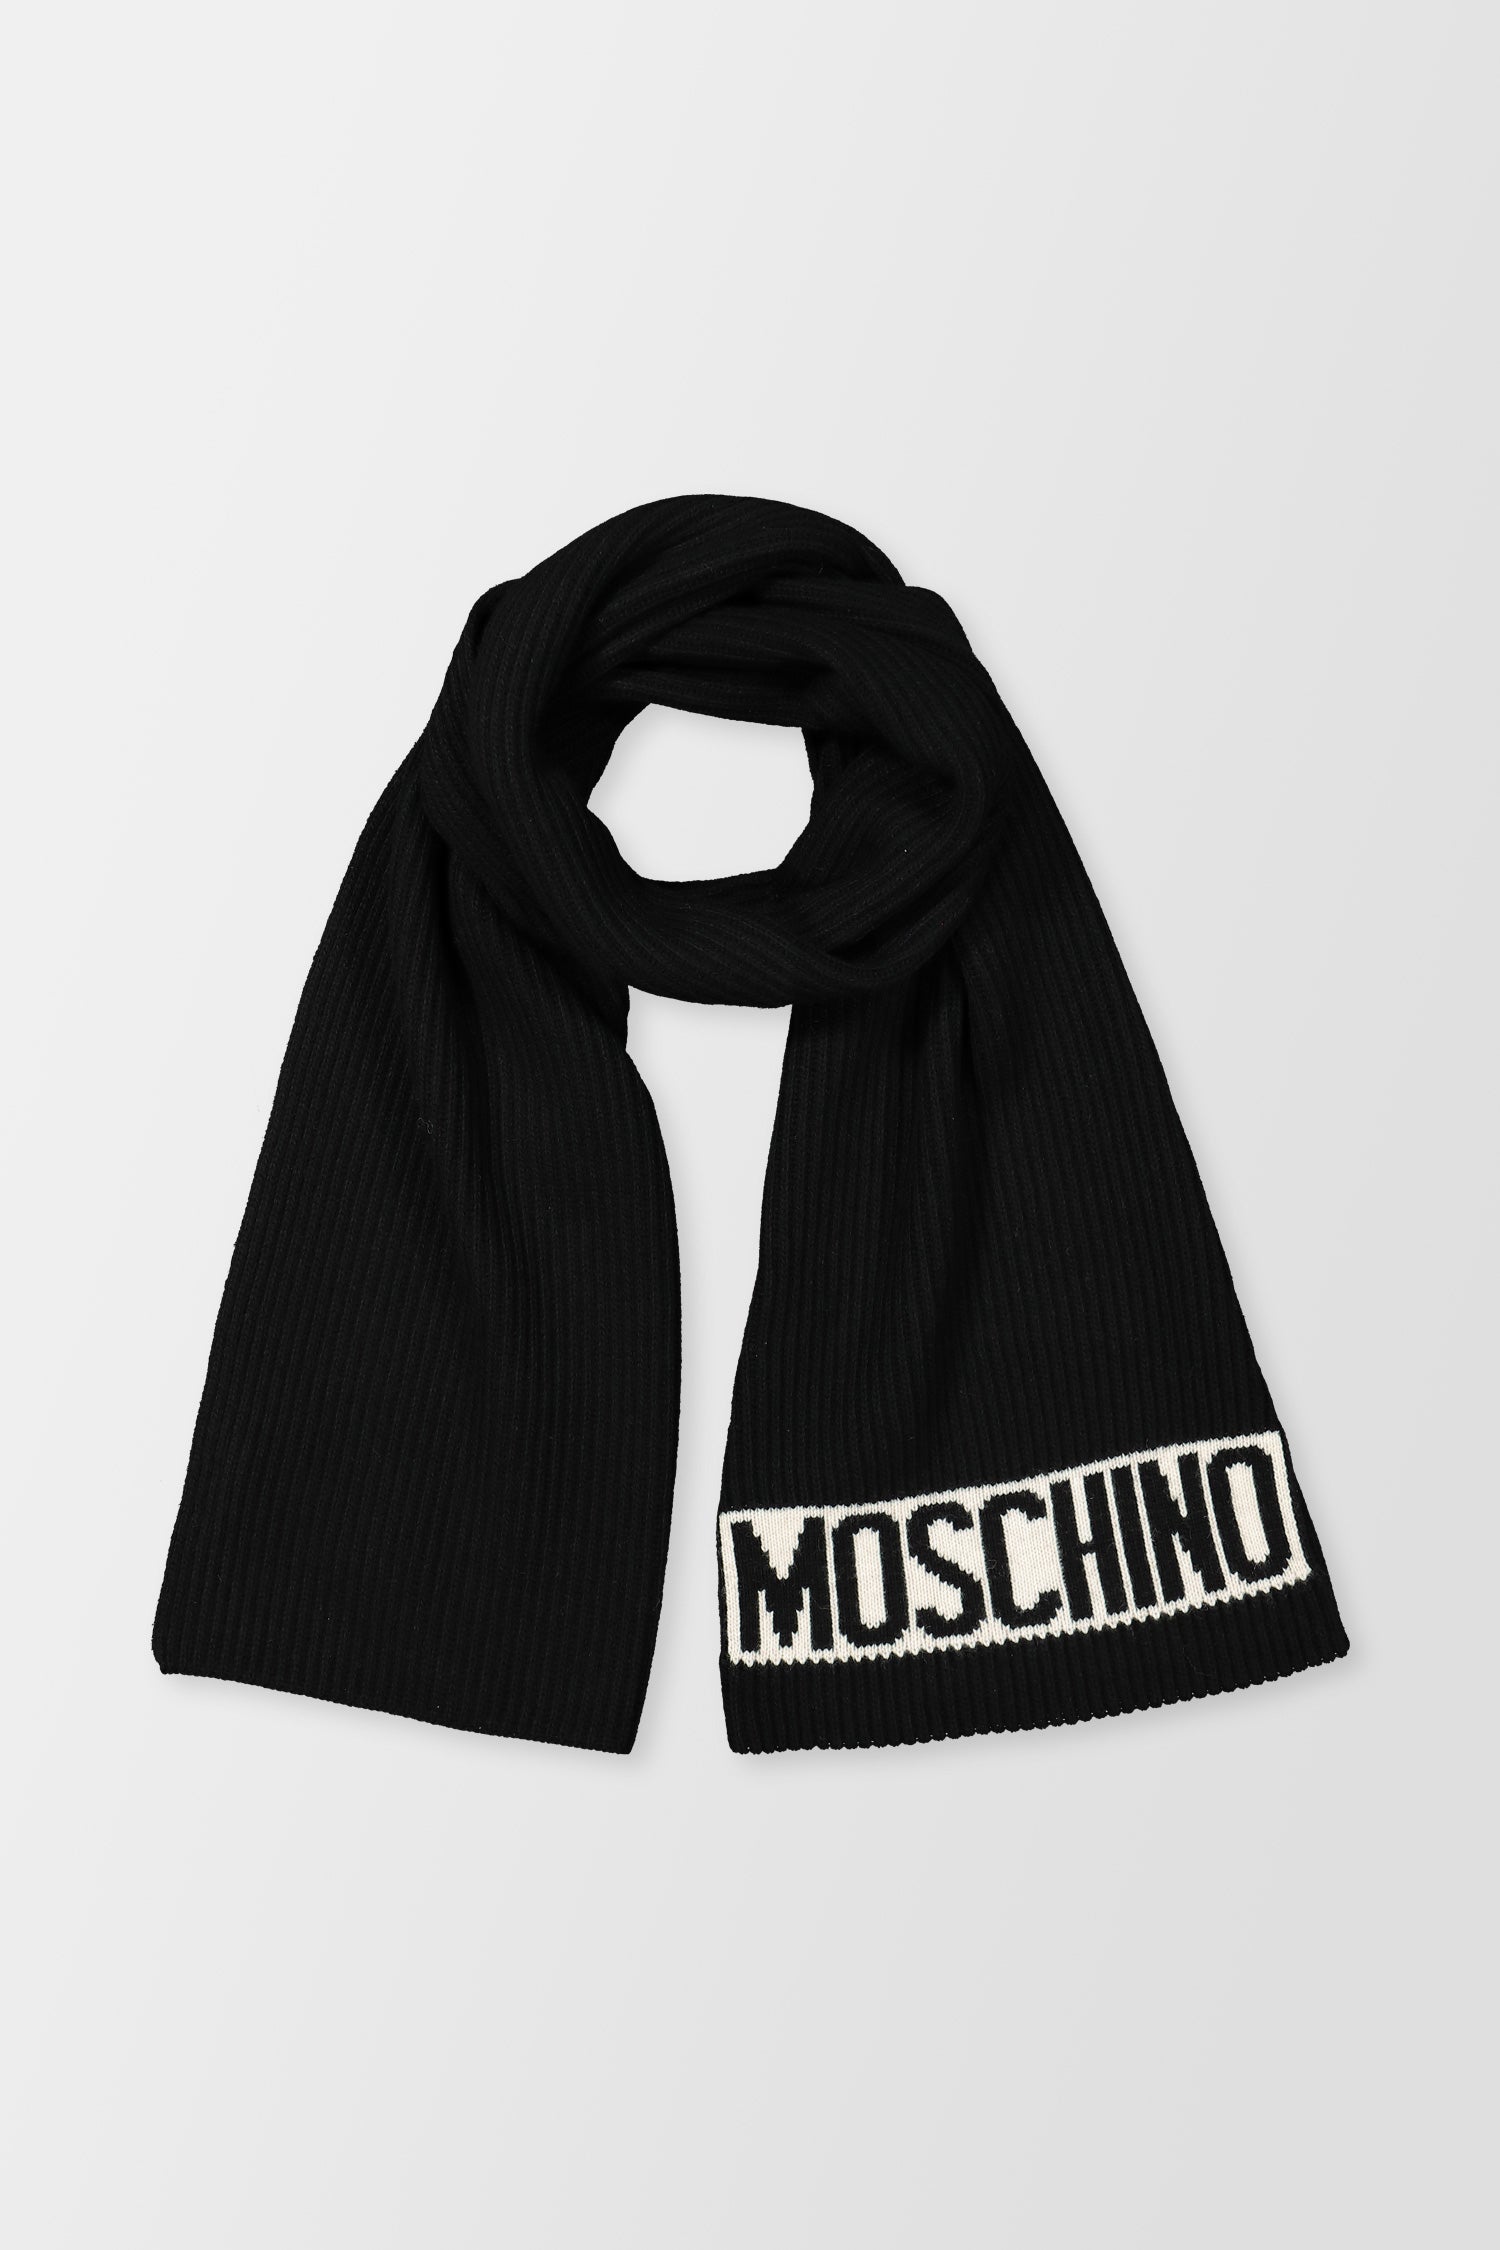 Moschino Black Scarf